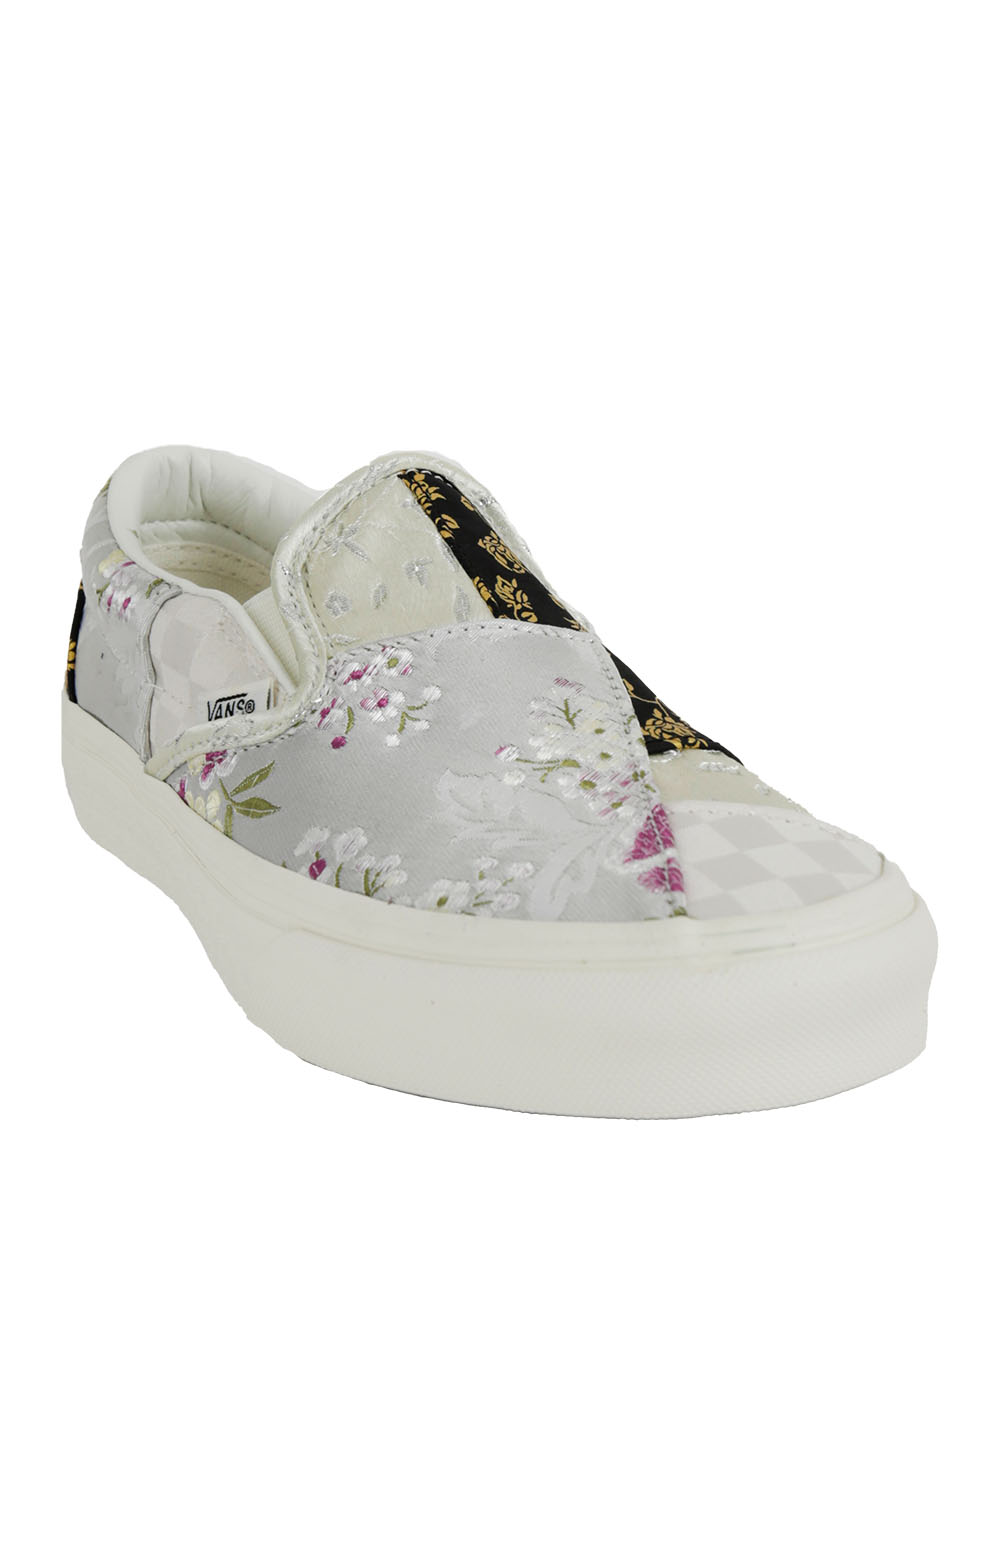 (JMH8L8) Brocade Classic Slip-On Shoes - Patchwork/True White